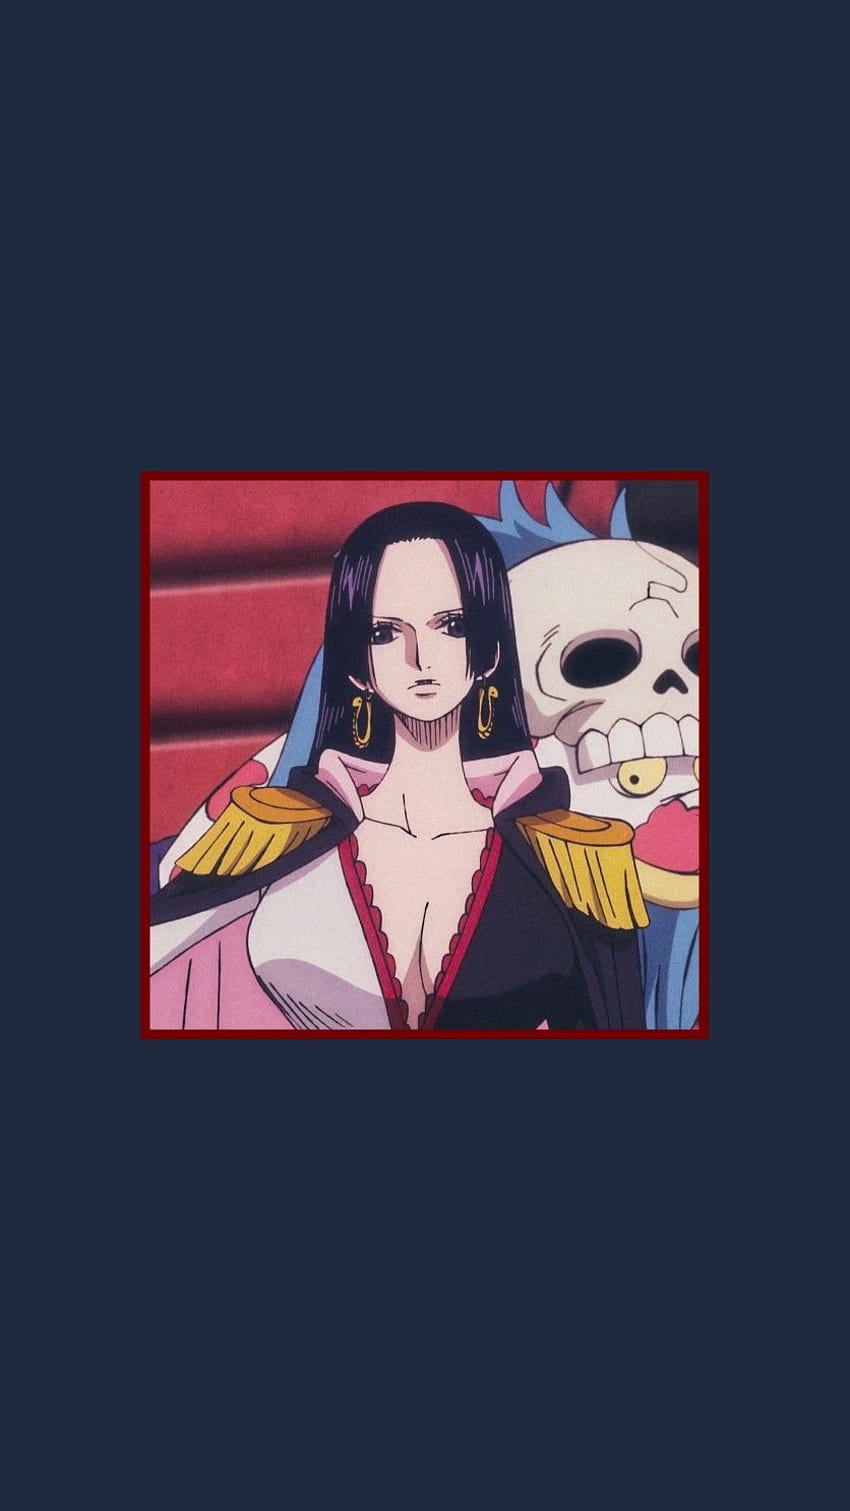 Boa Hancock - One Piece episode 896 by Berg-anime on DeviantArt